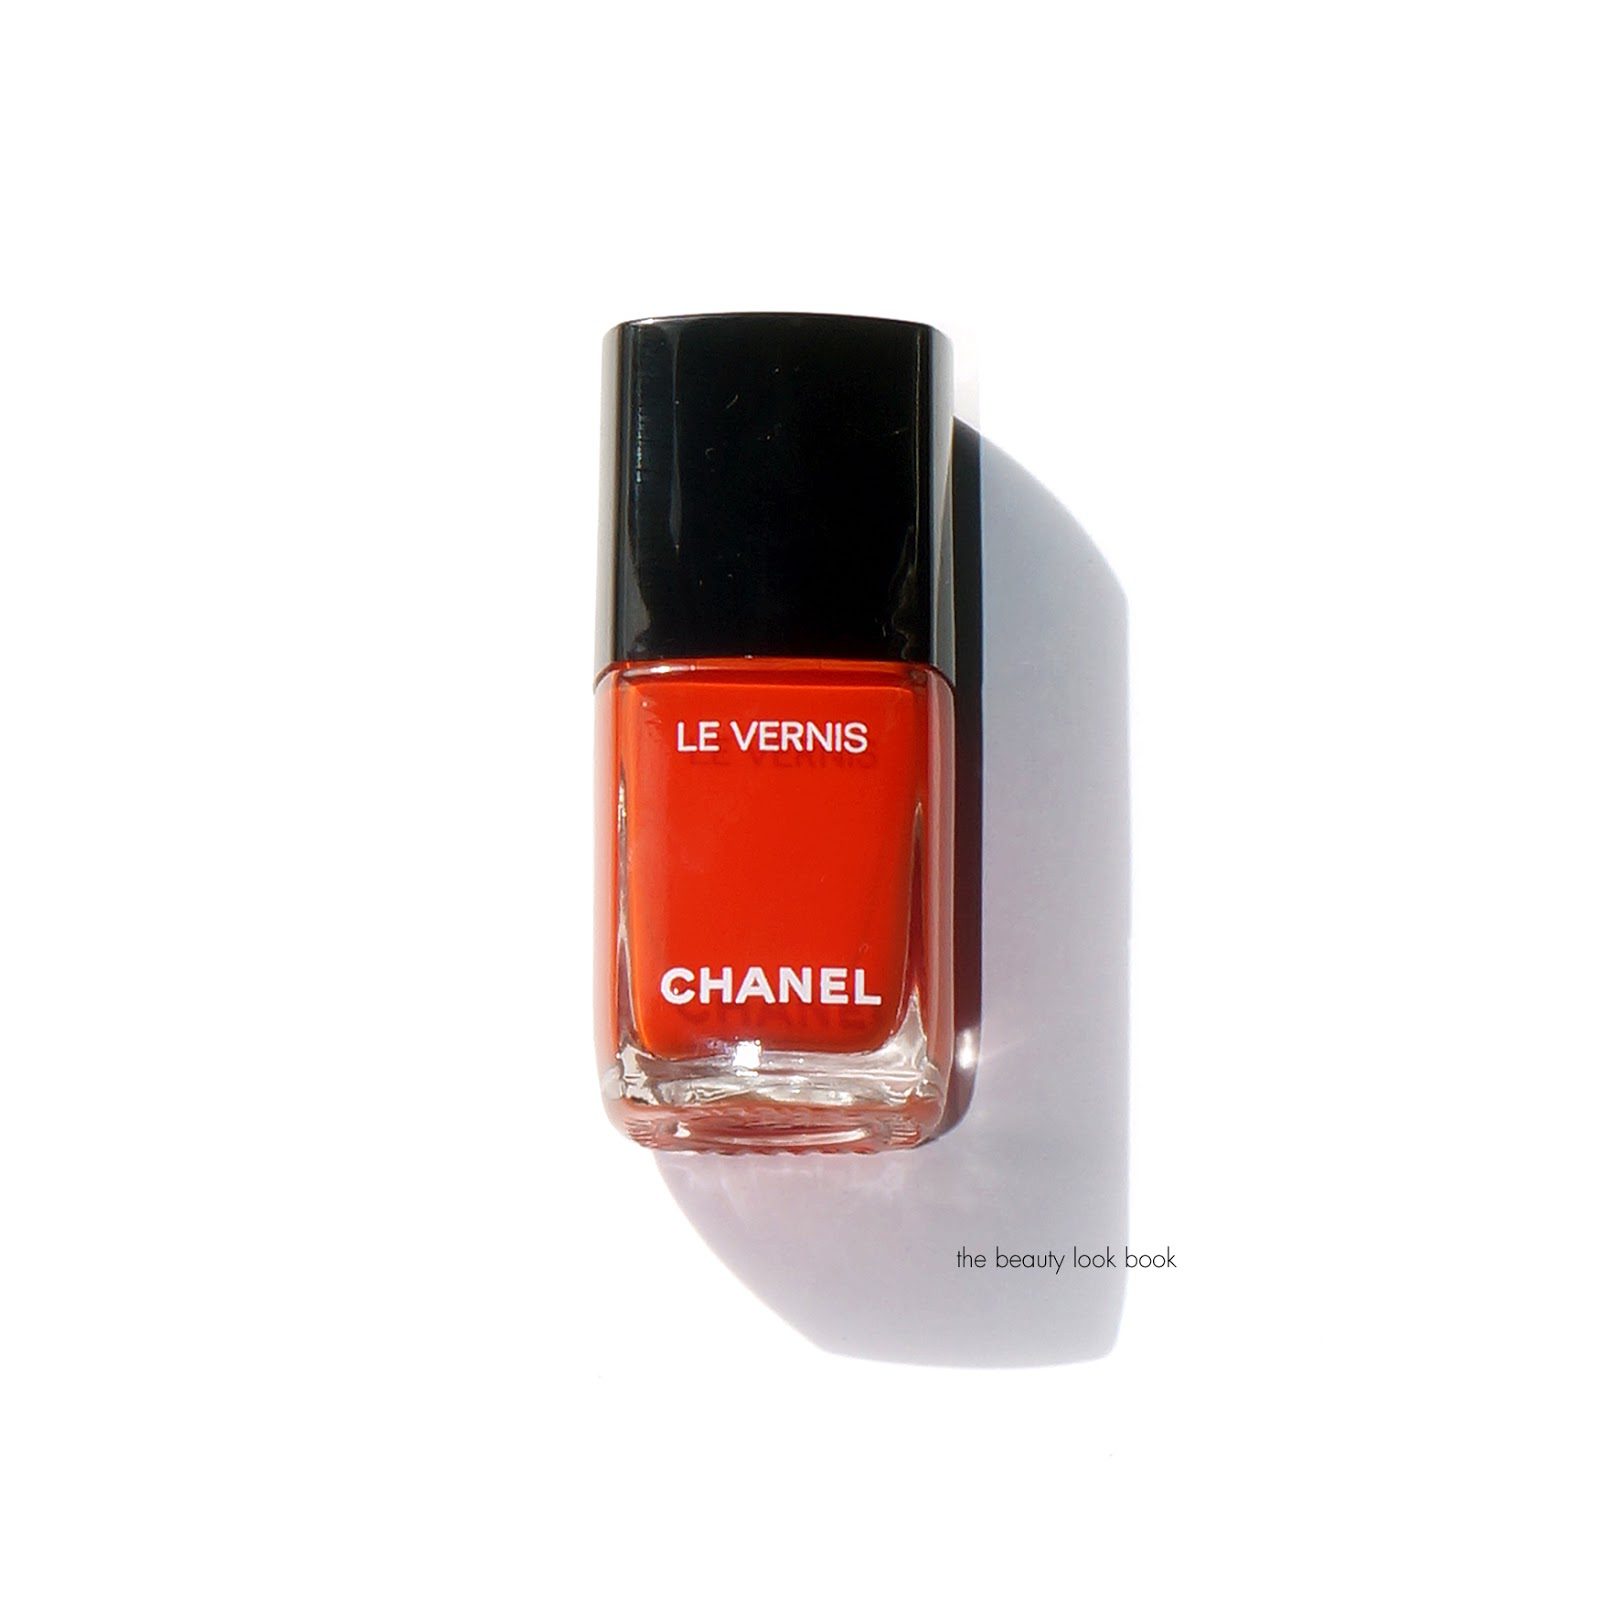 kompensation dannelse Ælte Chanel Espadrilles 534 Le Vernis for Summer 2016 - The Beauty Look Book